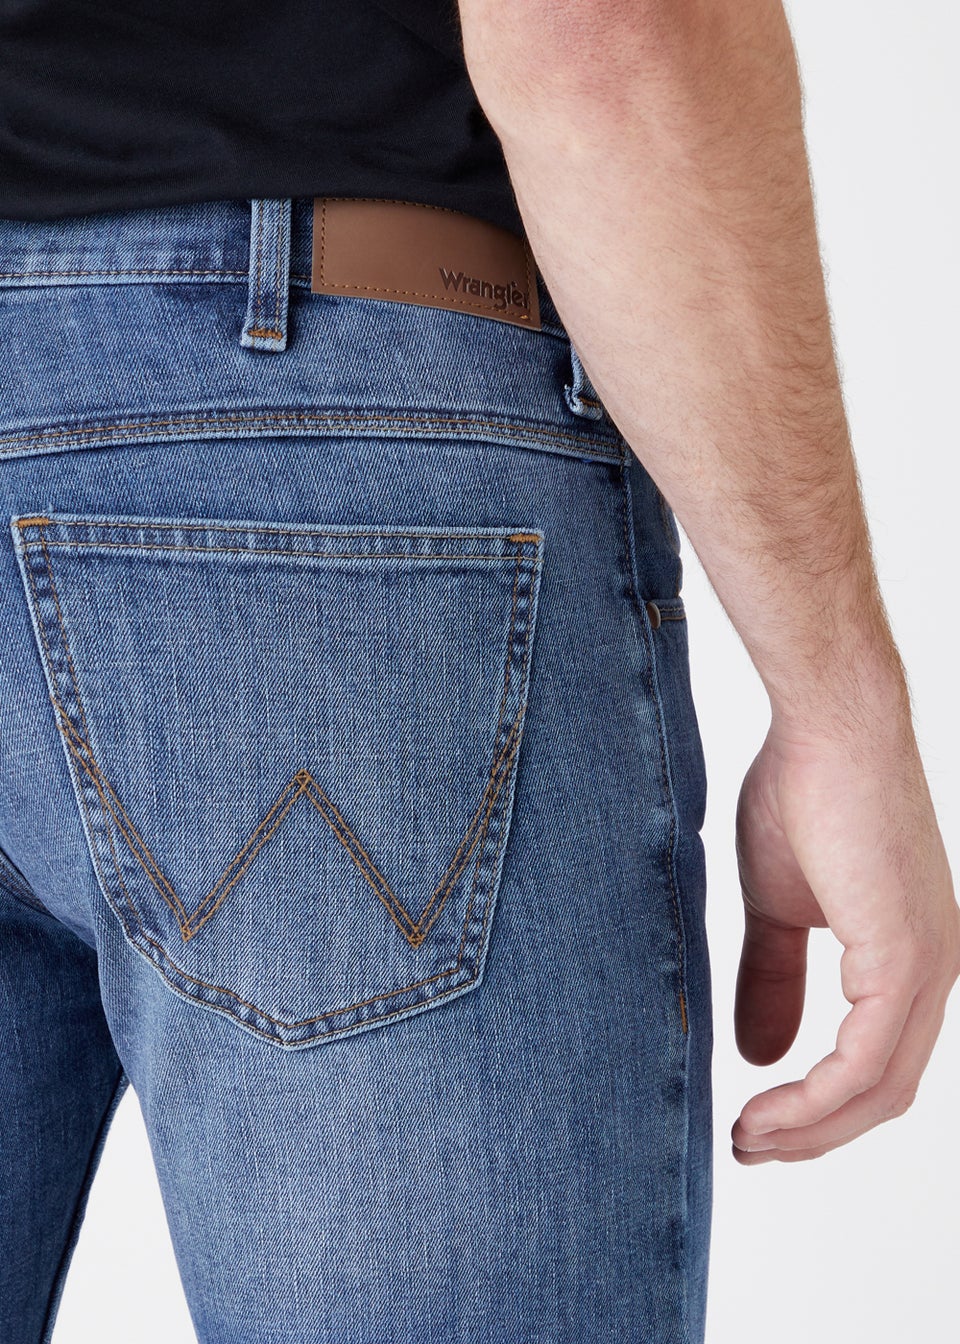 Wrangler Mid Stonewash Slim Fit Jeans - Matalan